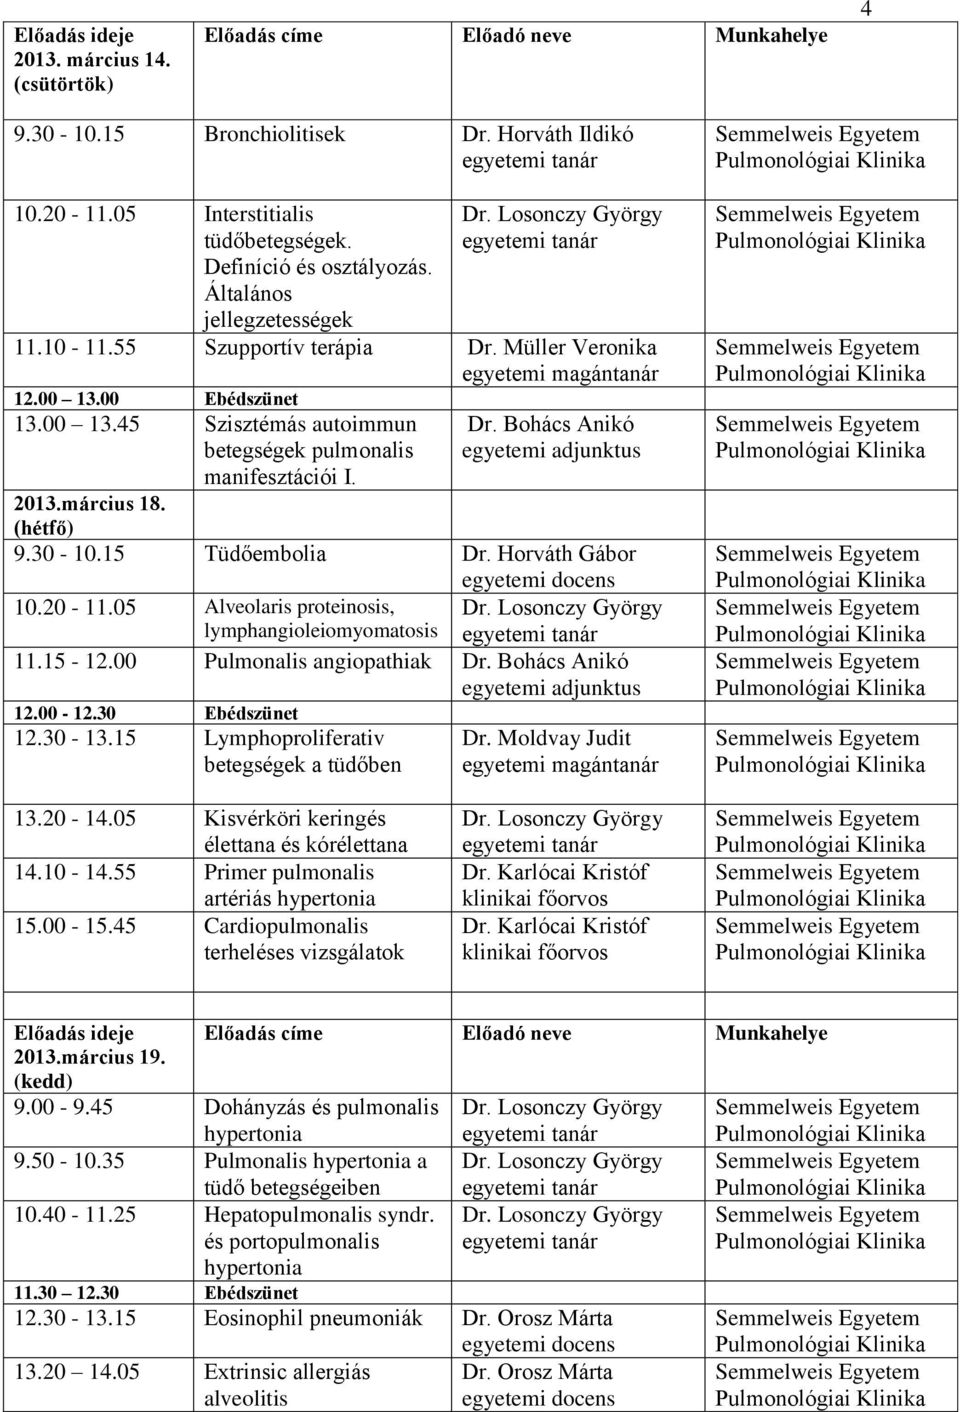 30-10.15 Tüdőembolia Dr. Horváth Gábor 10.20-11.05 Alveolaris proteinosis, lymphangioleiomyomatosis 11.15-12.00 Pulmonalis angiopathiak Dr. Bohács Anikó 12.00-12.30 Ebédszünet 12.30-13.